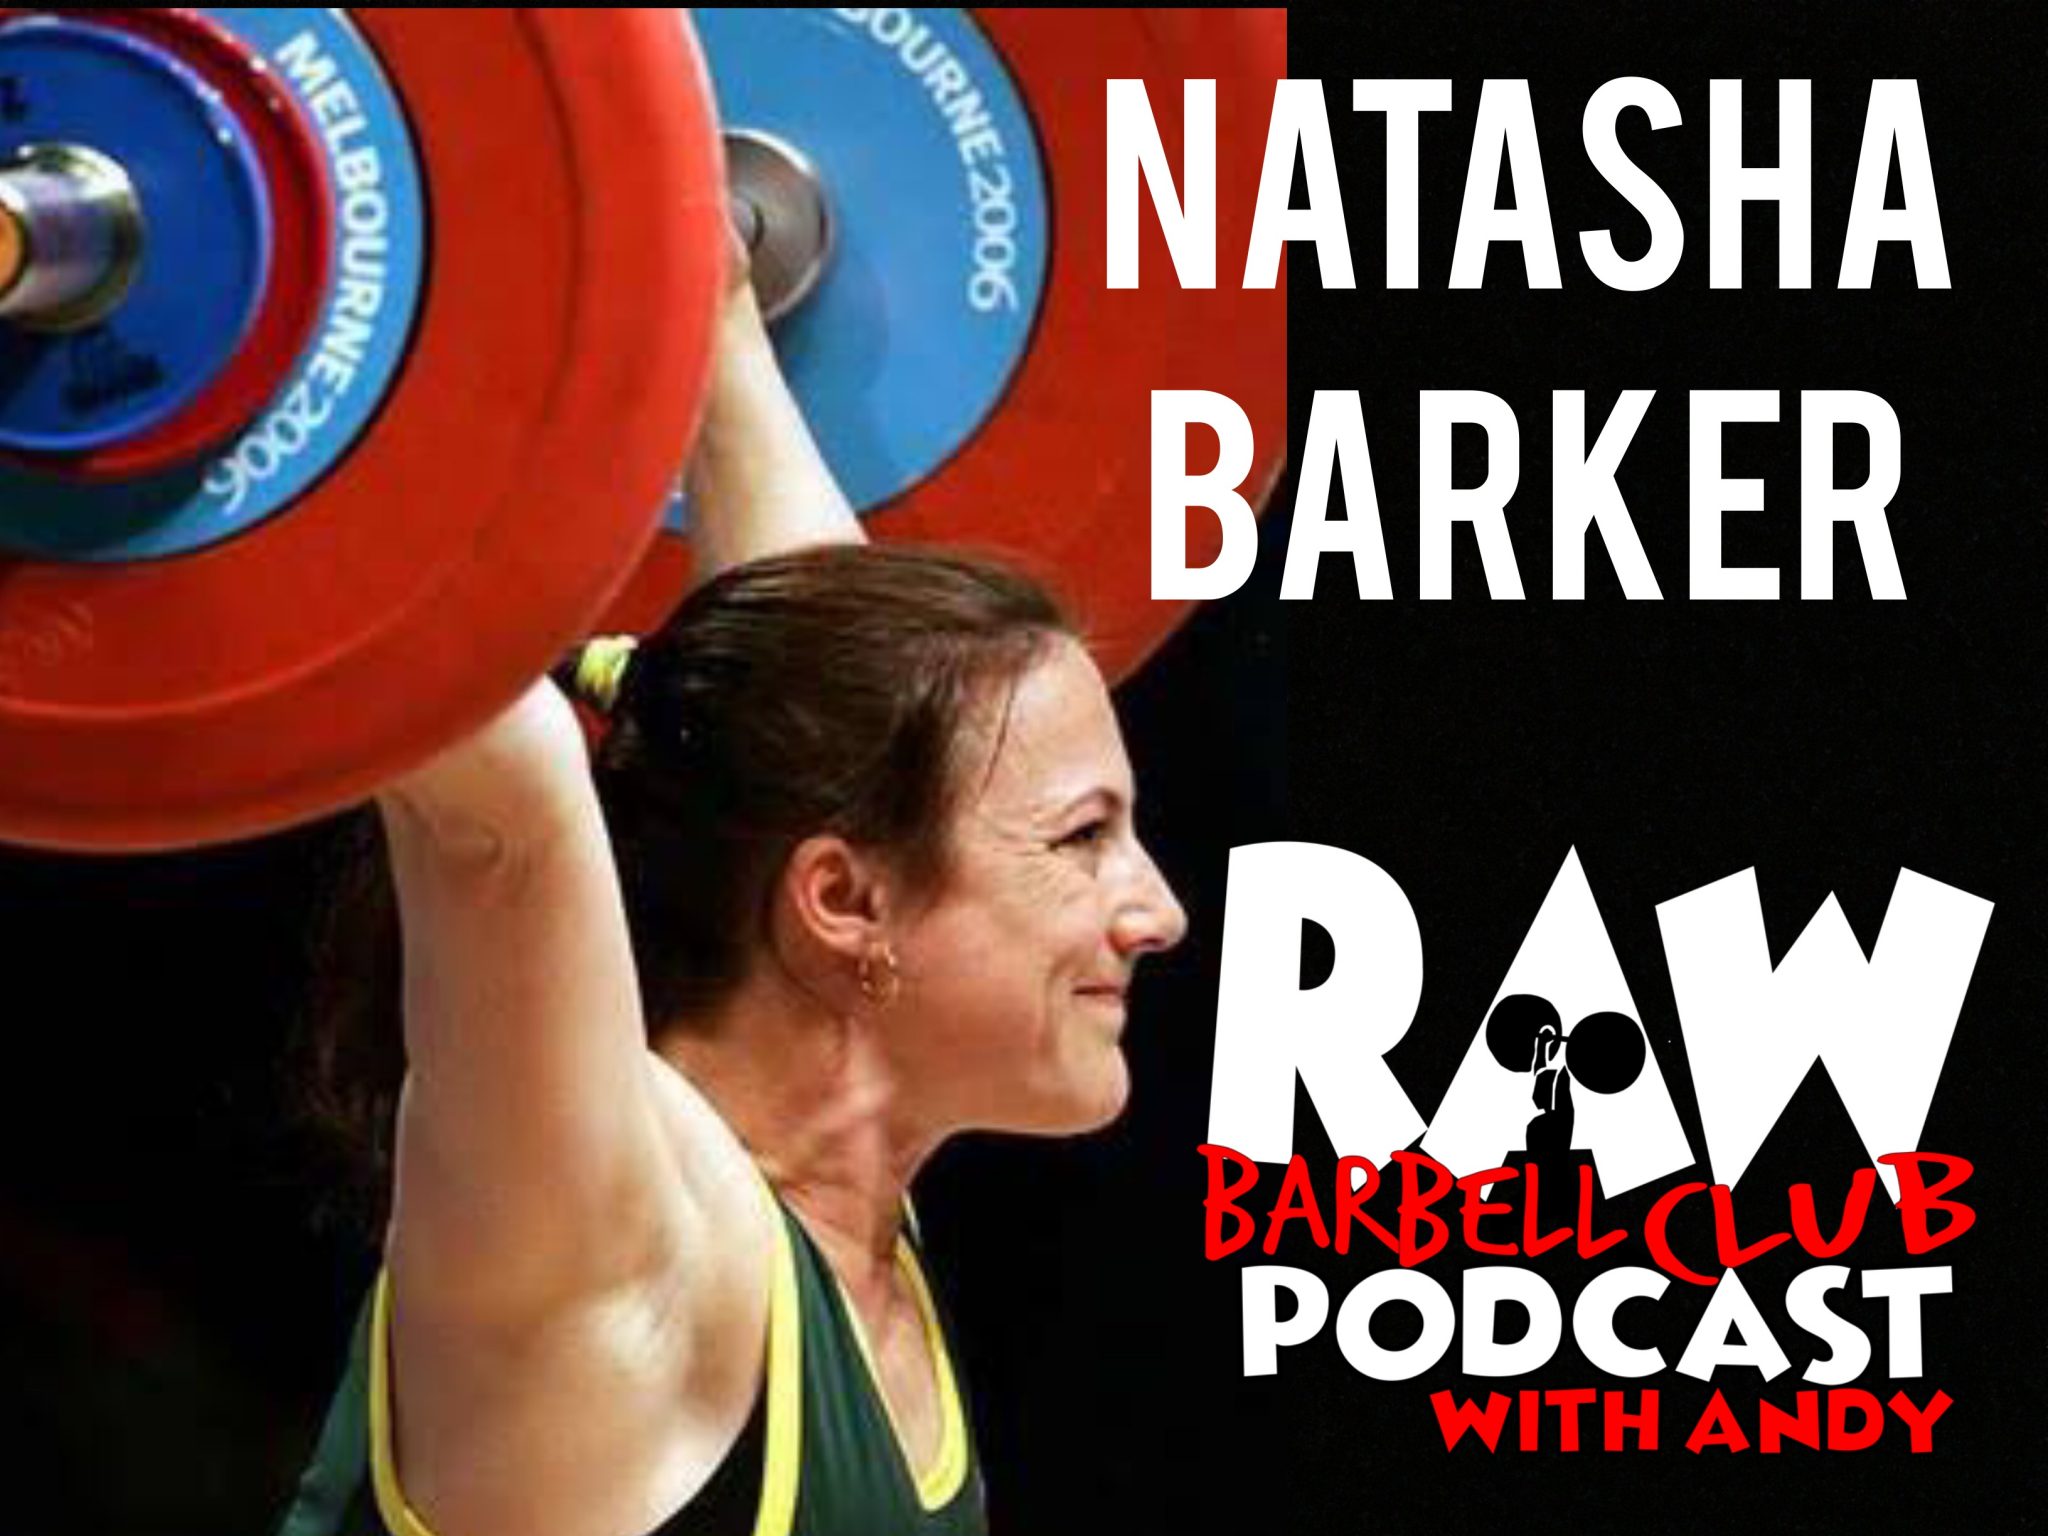 natasha barker journey of an olympian weightlifter